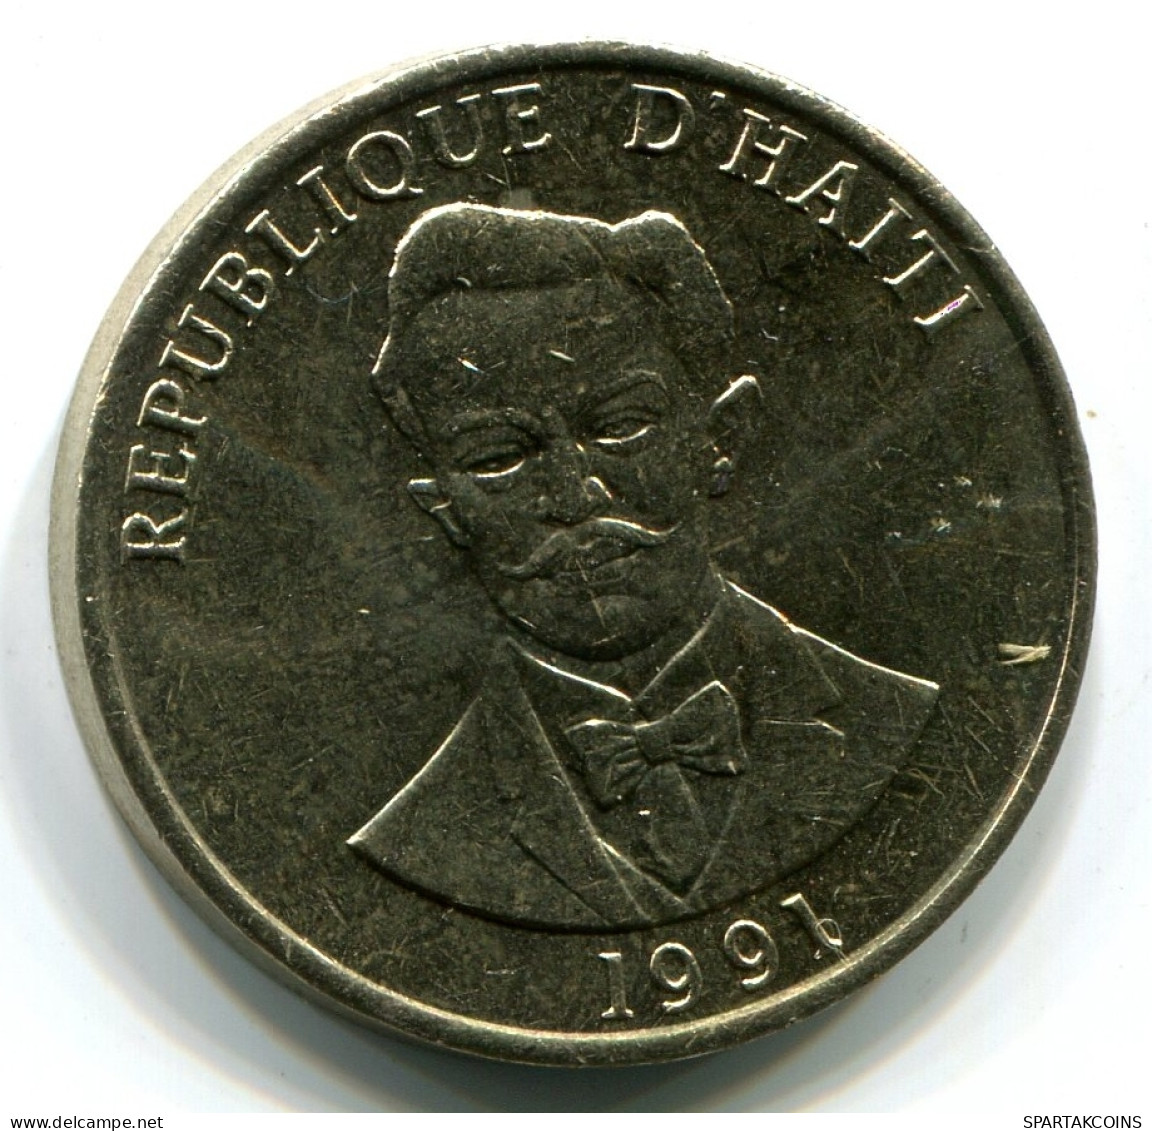 20 CENTIMES 1991 HAITI UNC Coin #W11005.U - Haïti